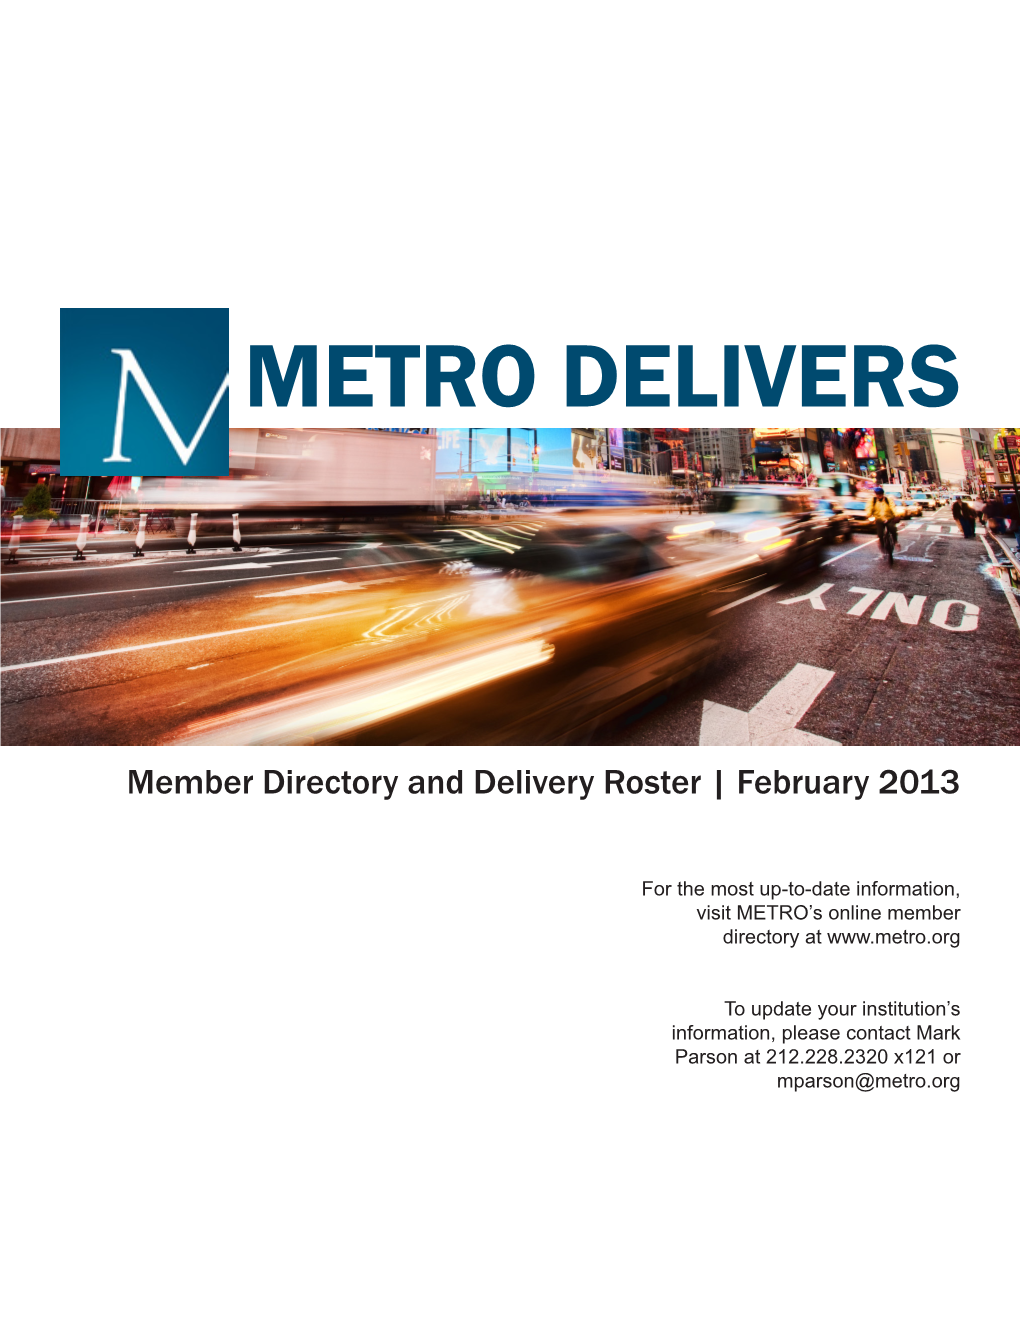 Metro Delivers